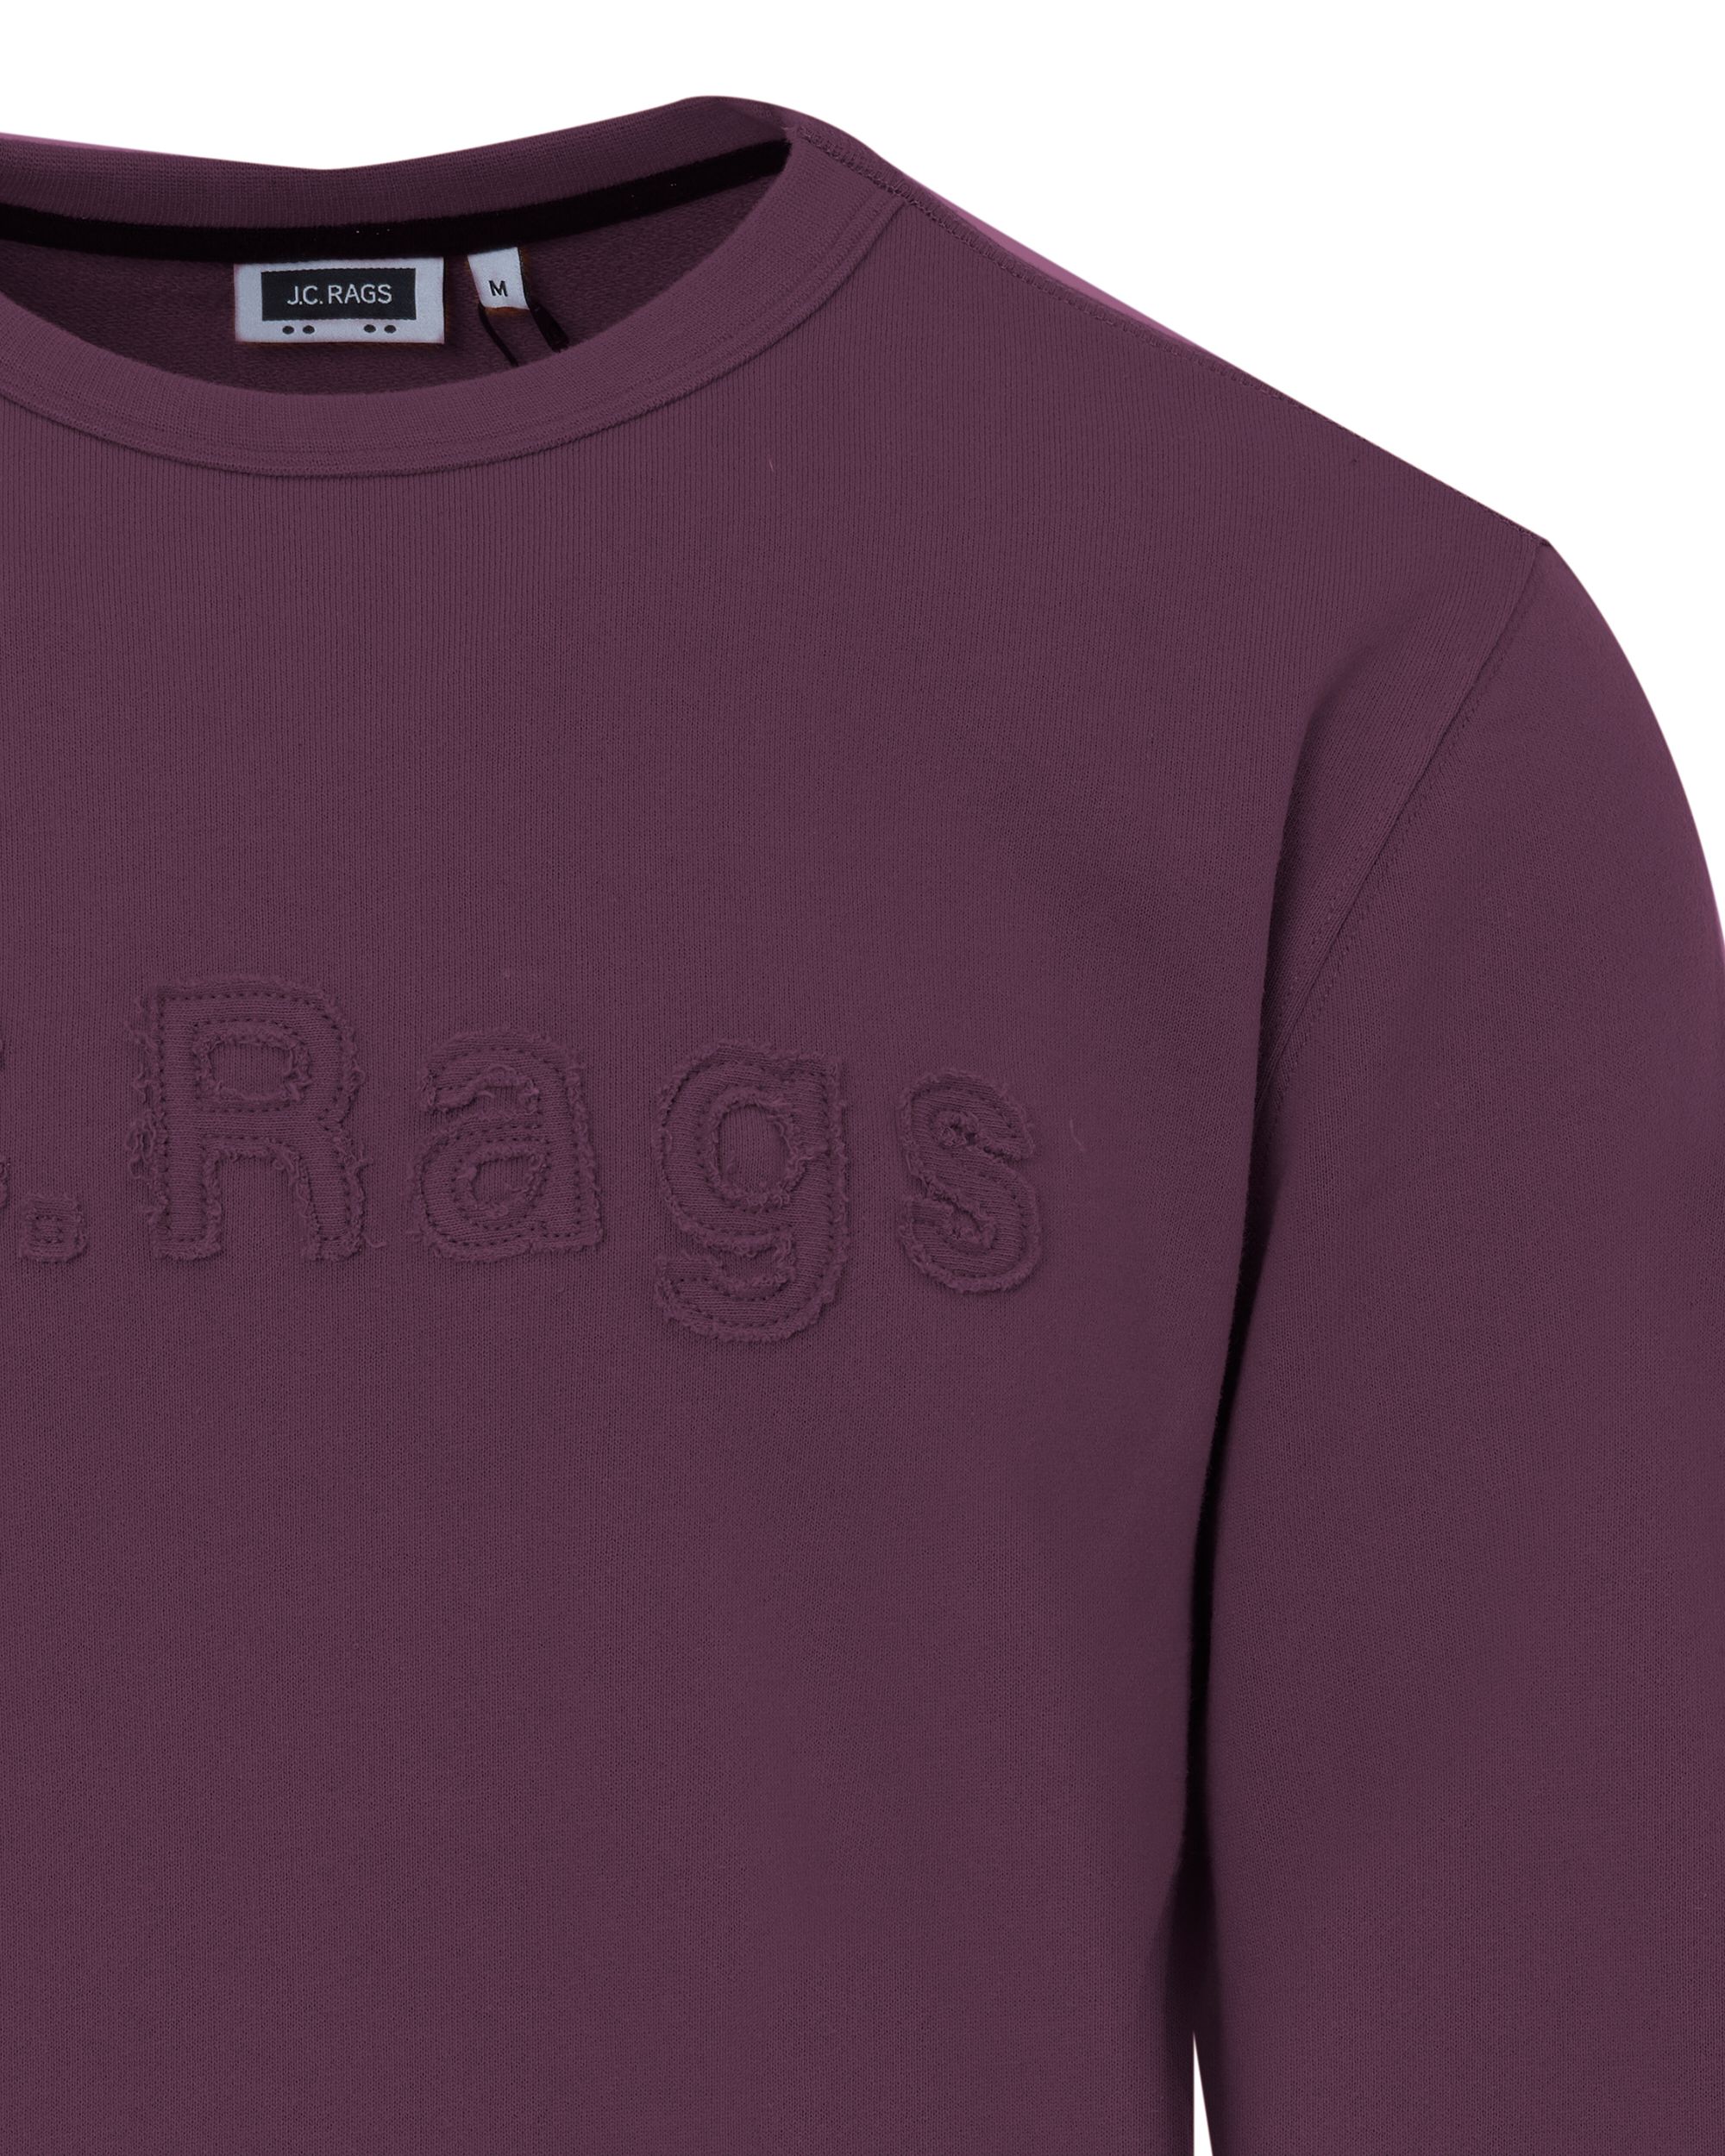 J.C. RAGS Sweater Huckleberry  084530-004-L